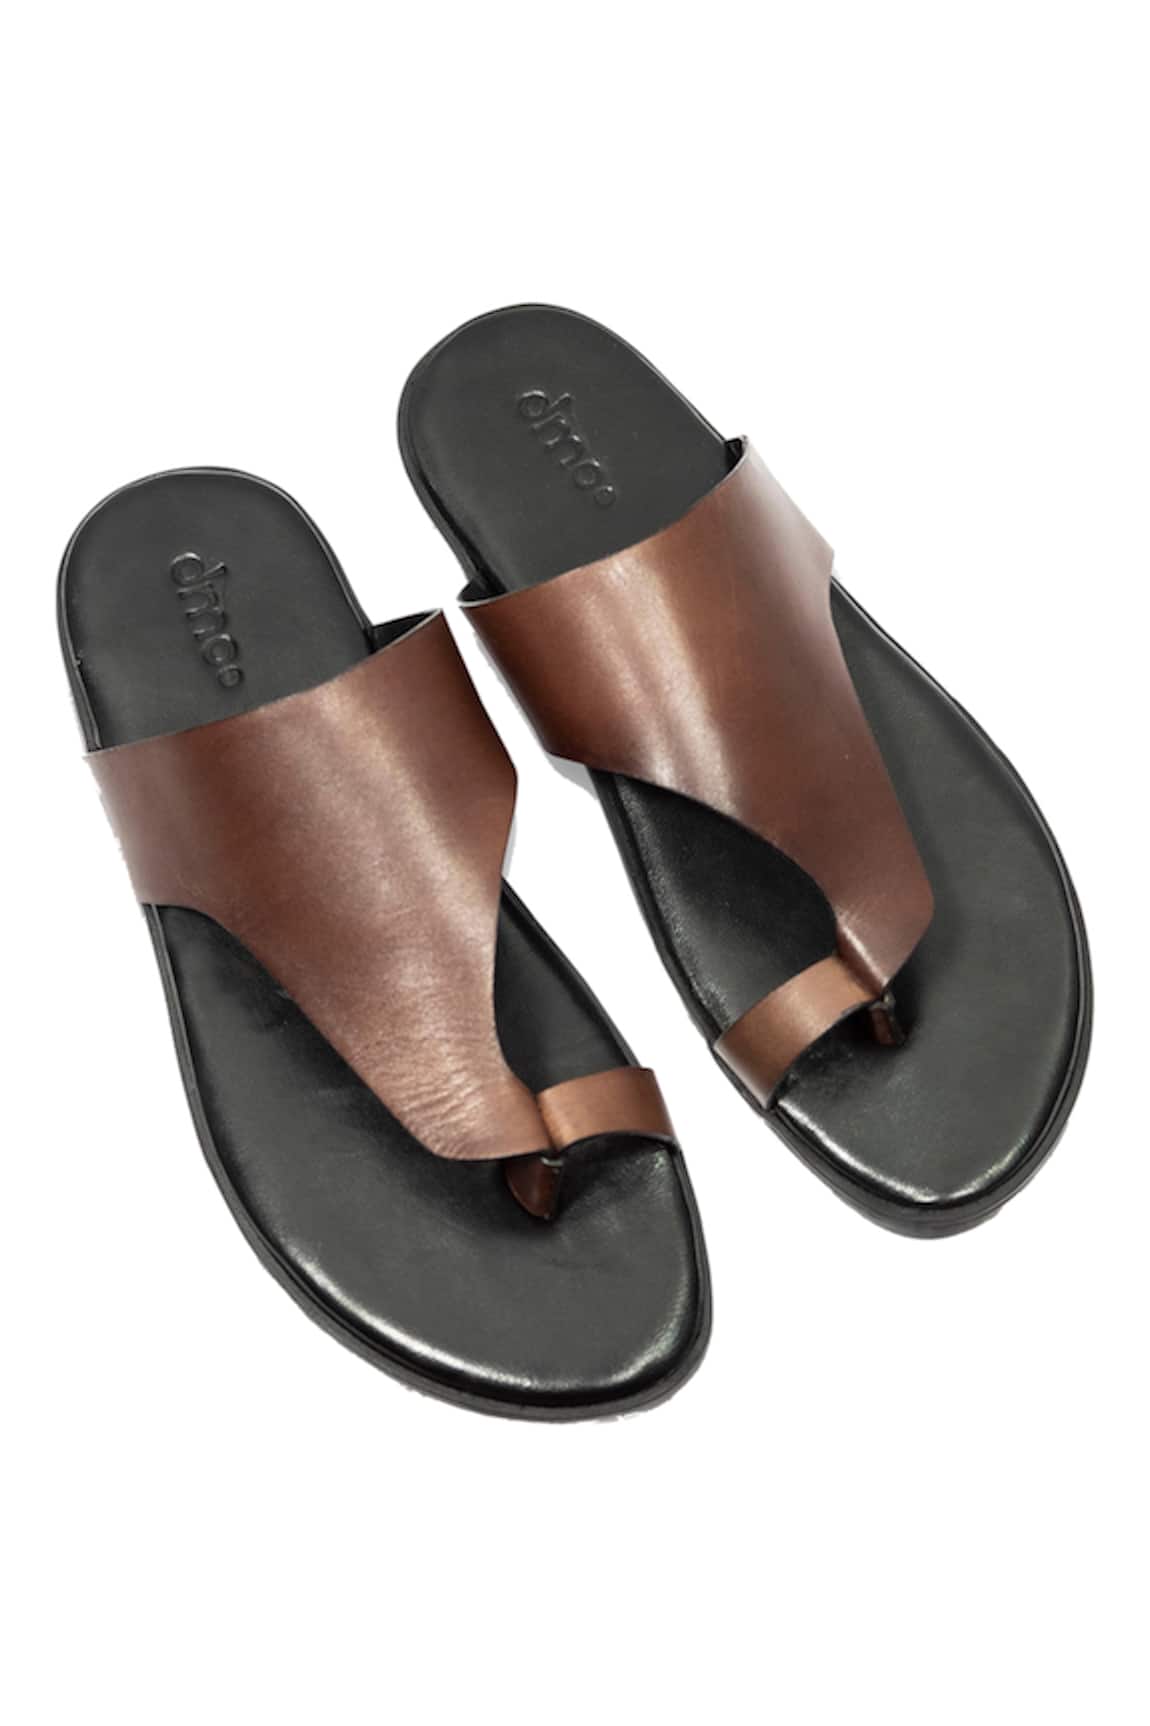 Dmodot Leather Strap Sandals